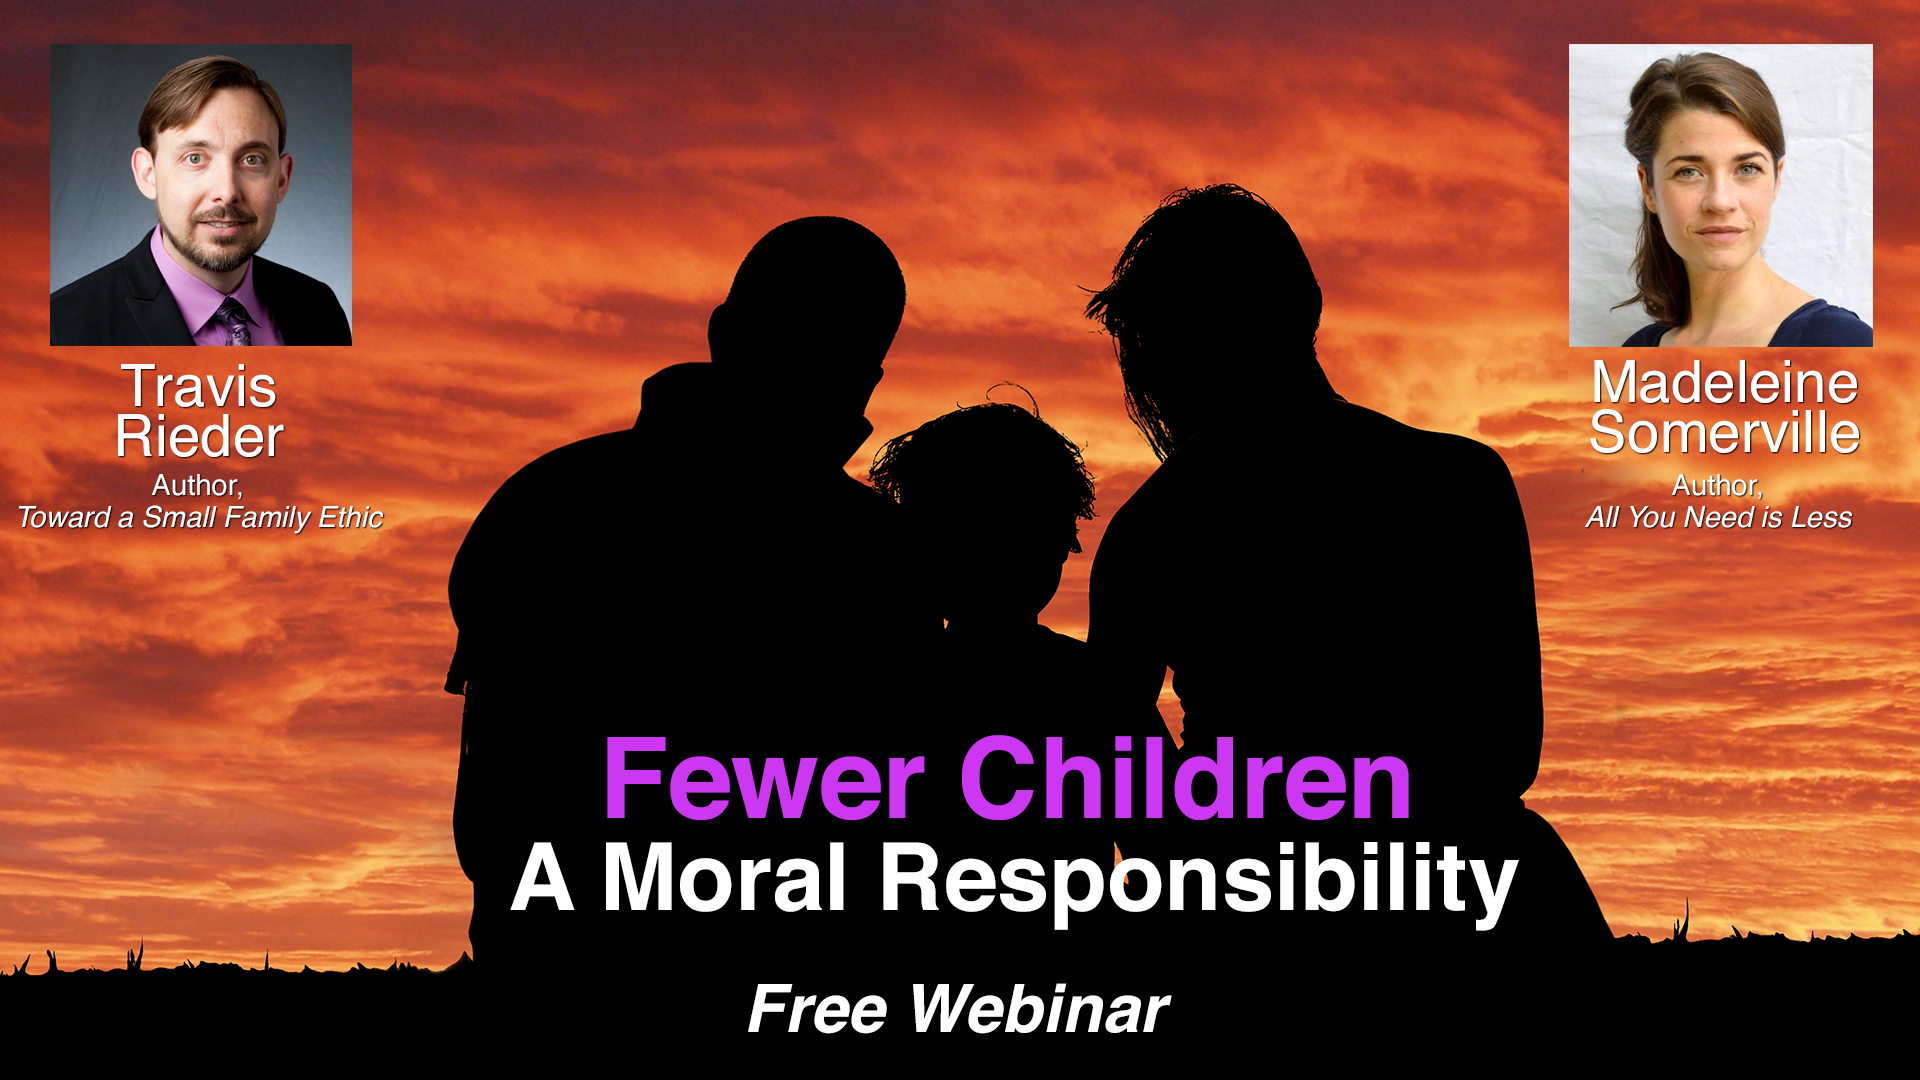 Free webinar: Fewer Children - A Moral Responsibility